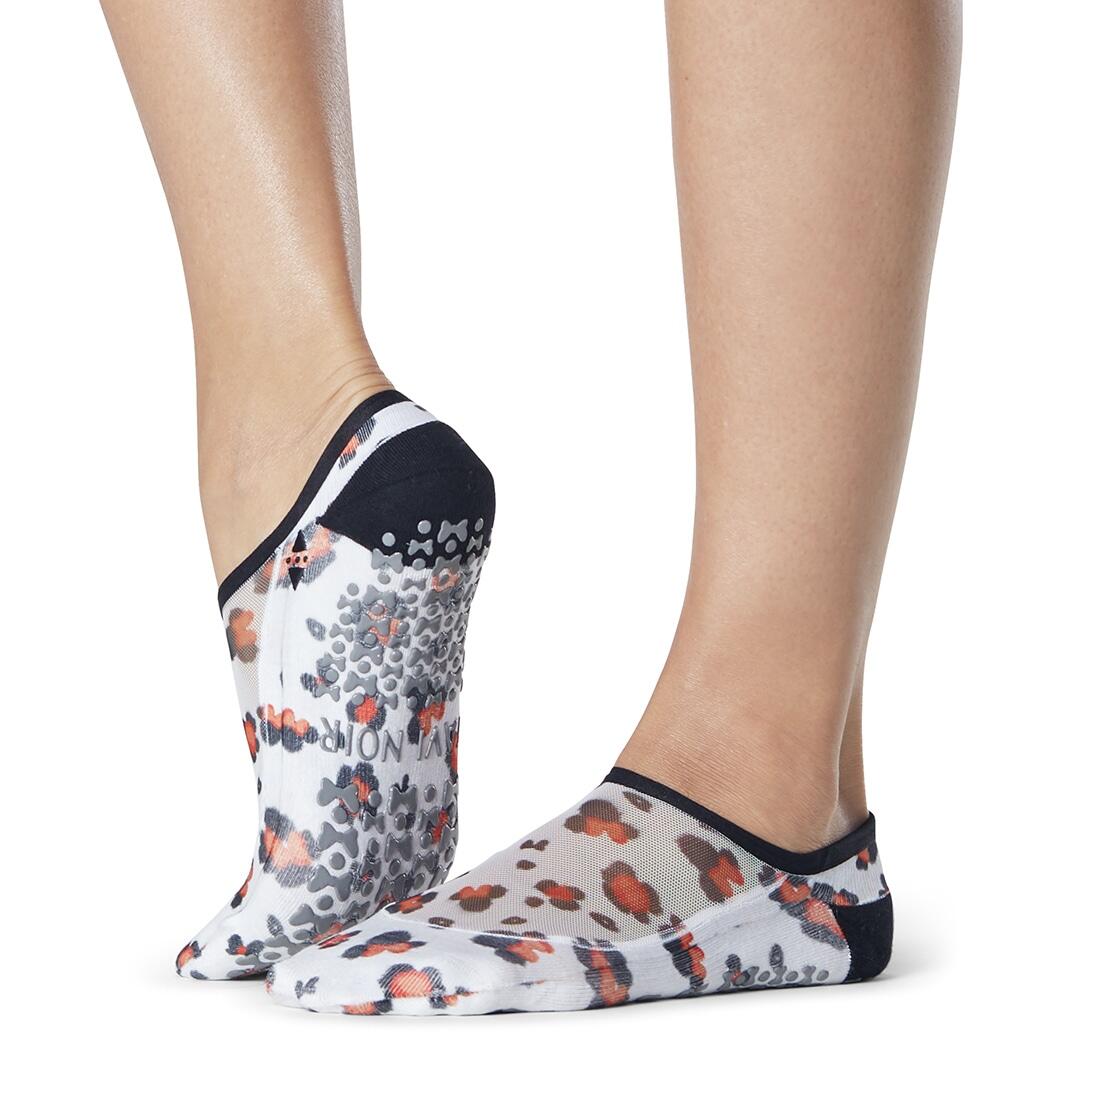 FITNESS-MAD Womens/Ladies Maddie Leopard Print Minnie Mouse Disney Gripped Liner Socks